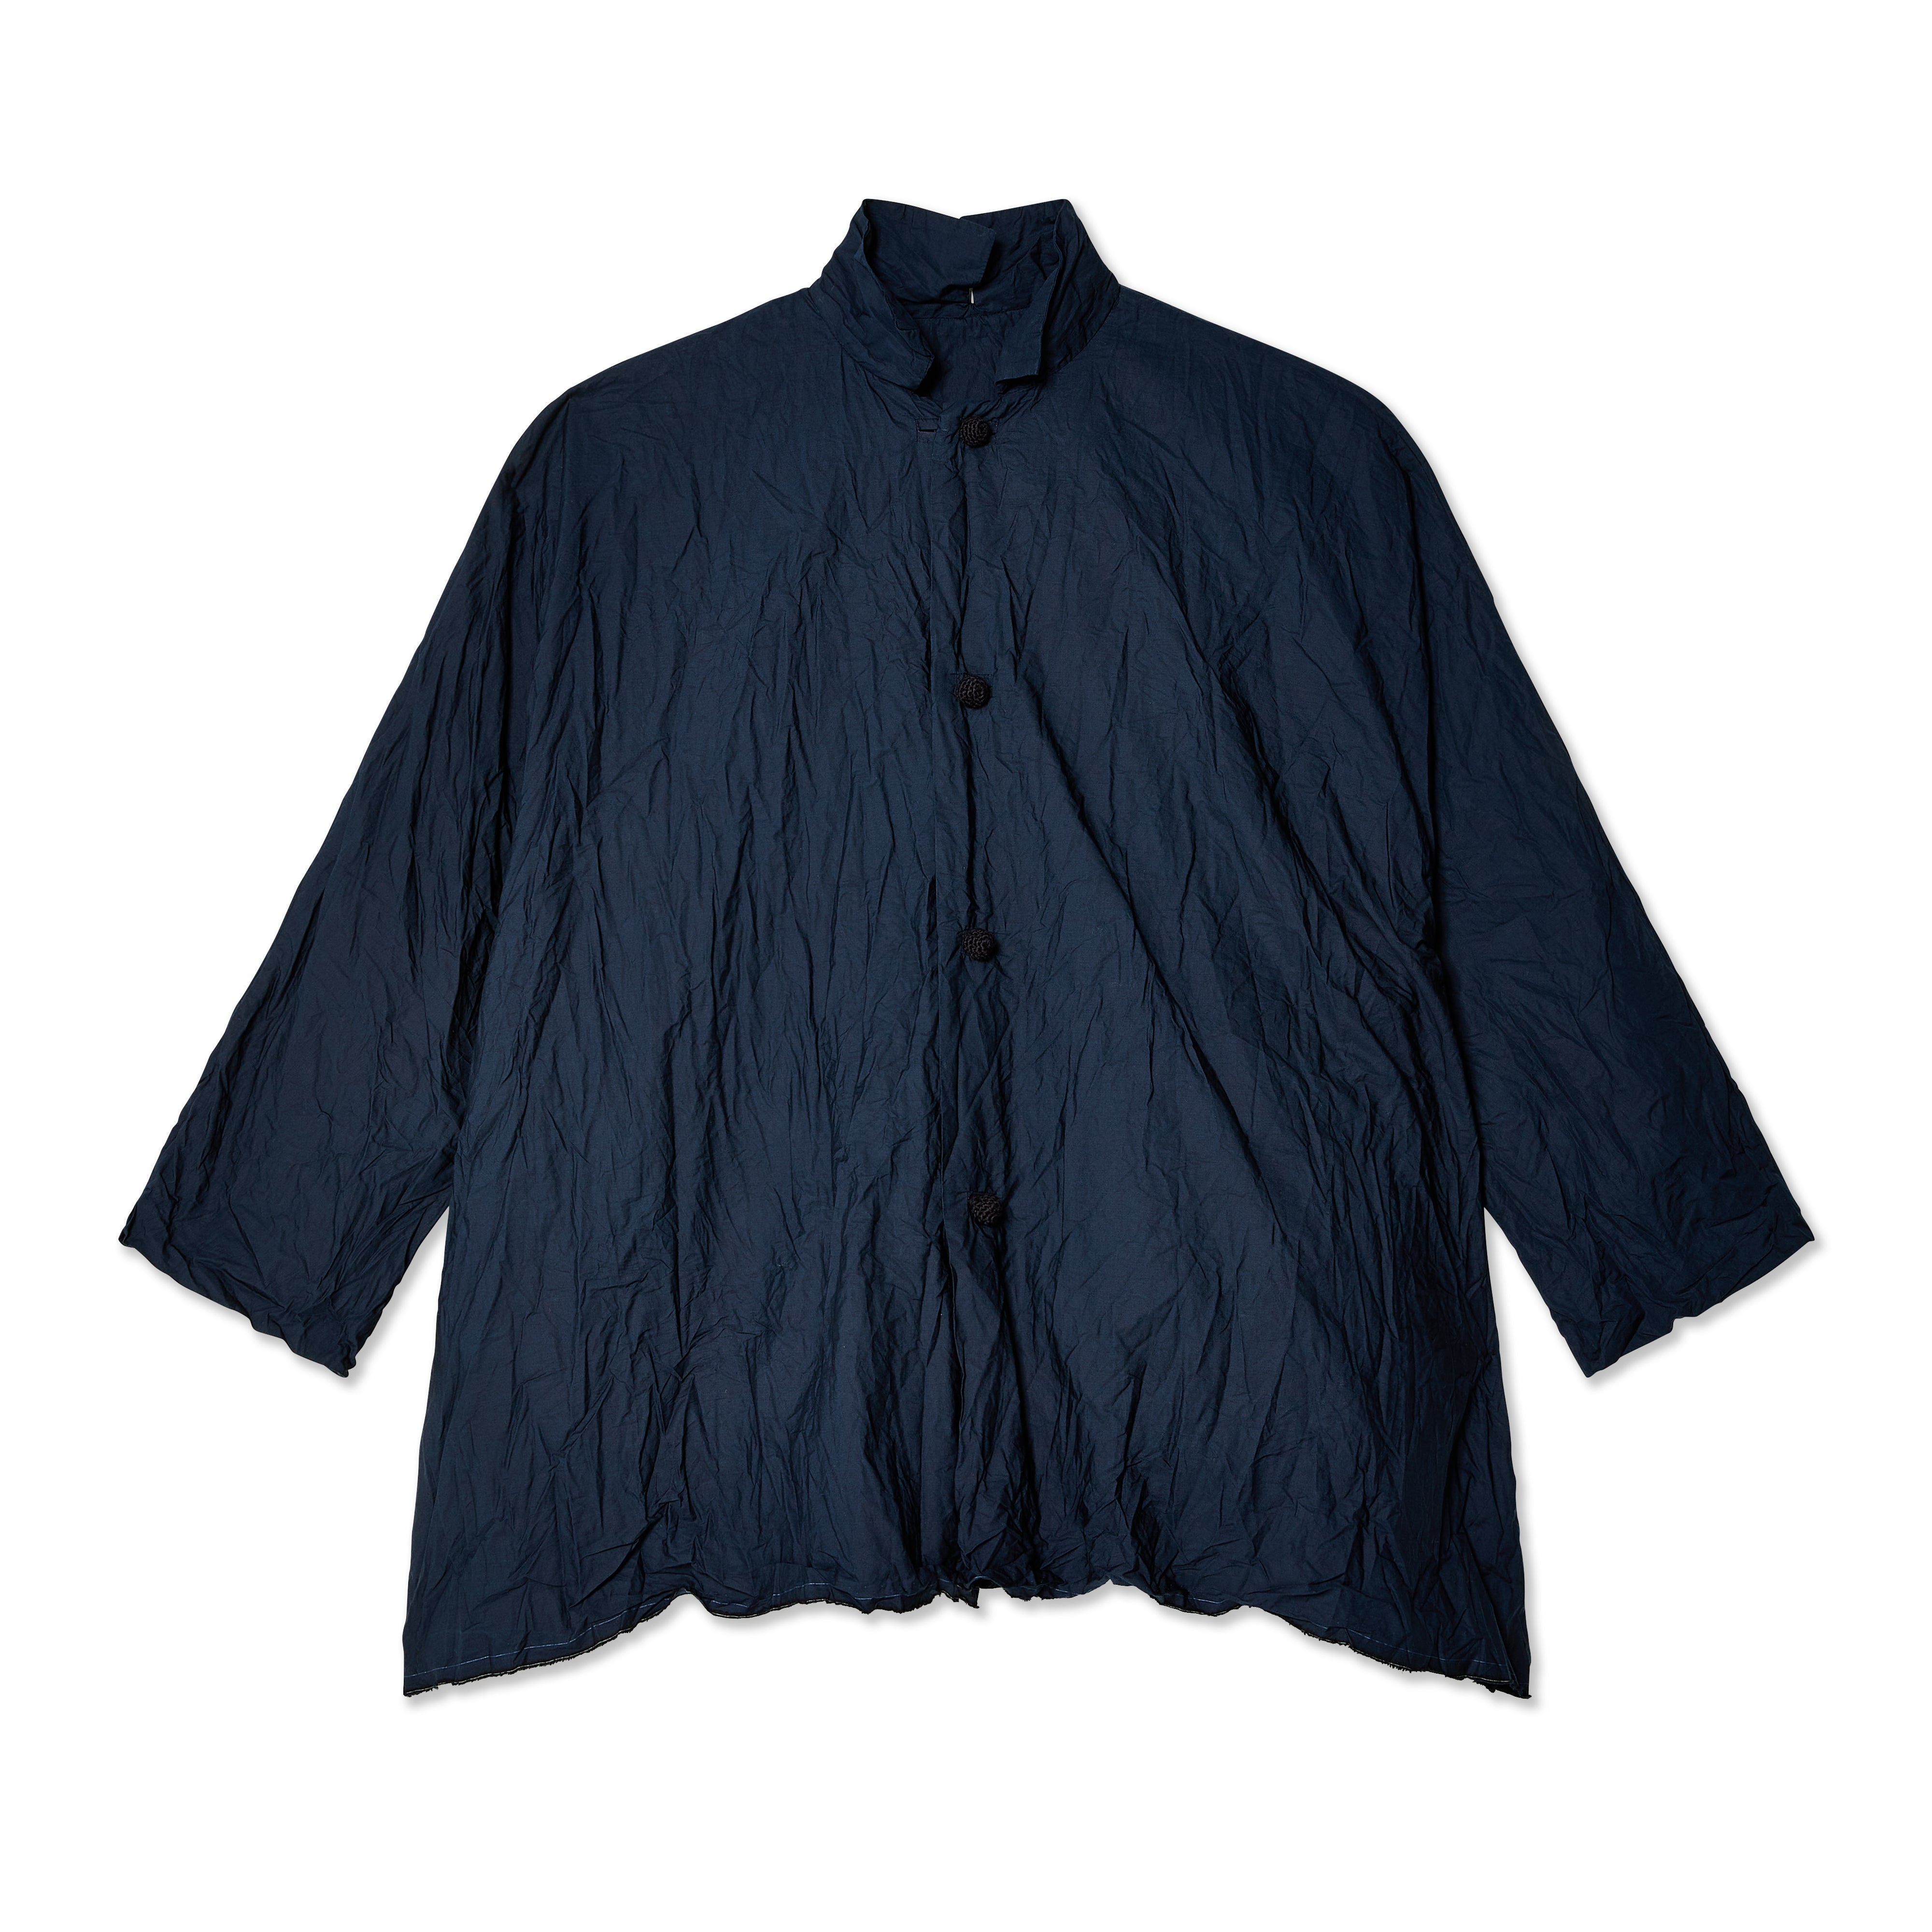 Daniela Gregis - Women's Camicia Luglio Jacket - (Navy Blue)